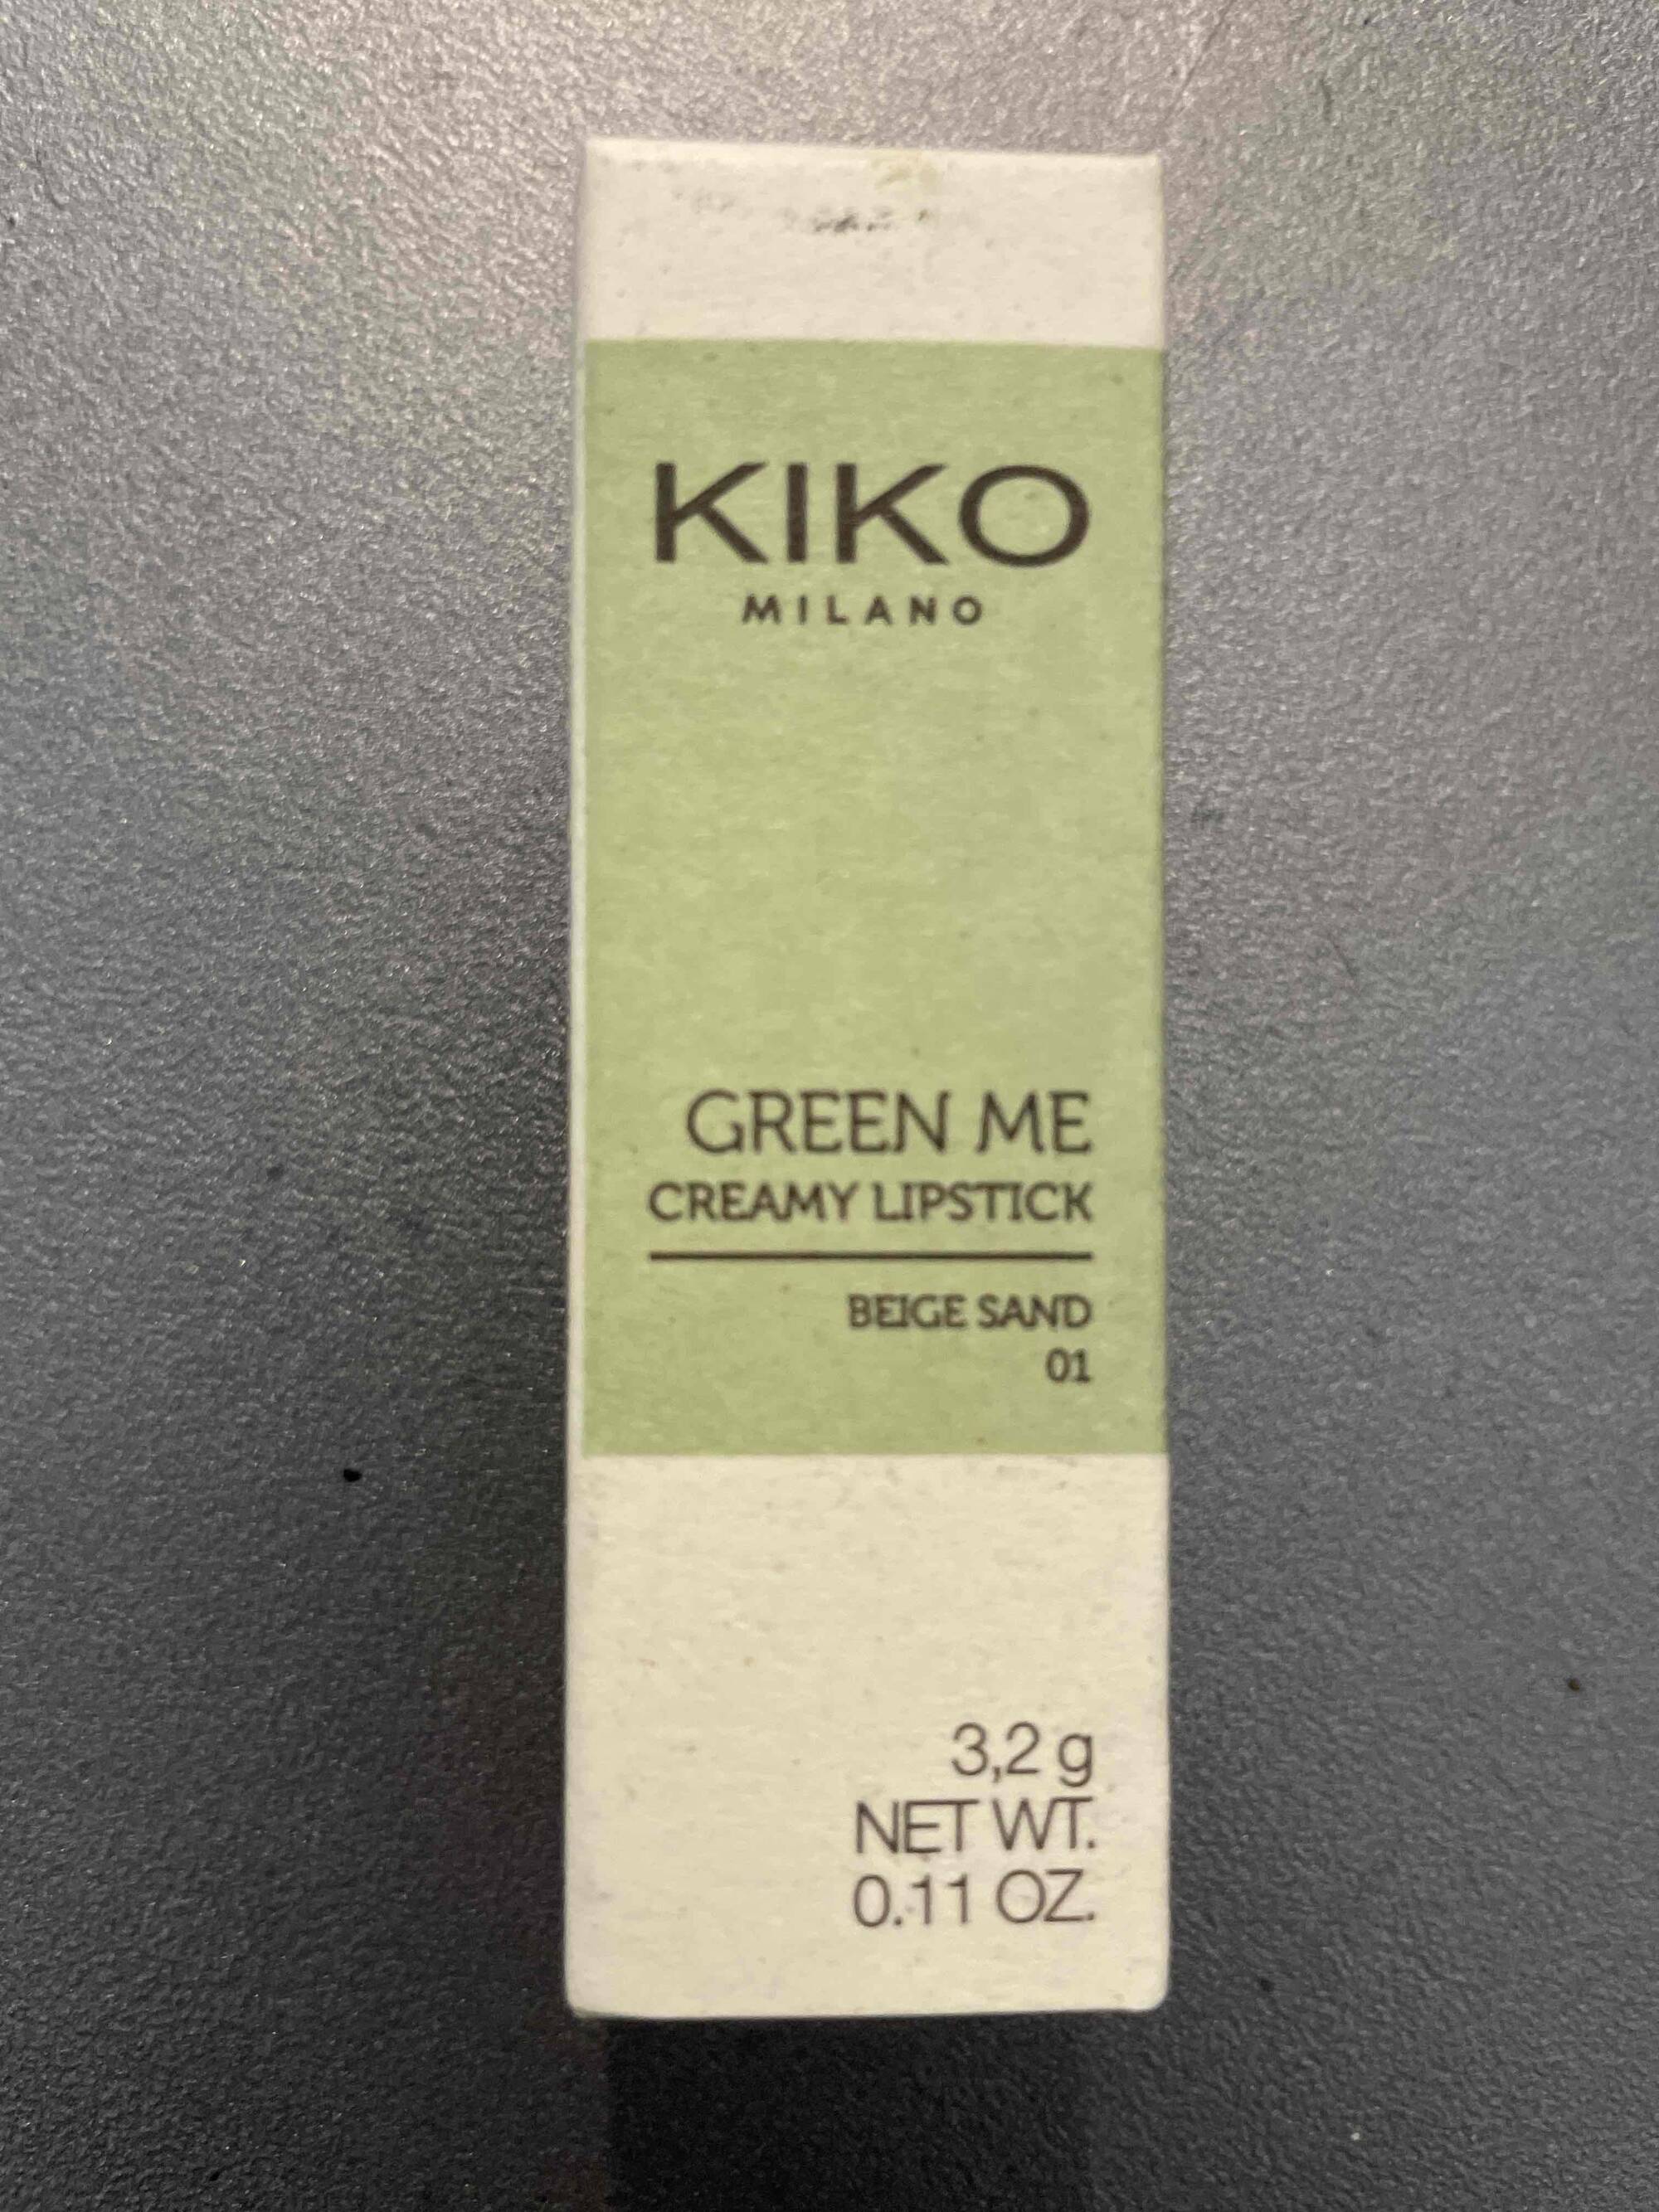 KIKO MILANO - Green me - Creamy lipstick 01 beige sand